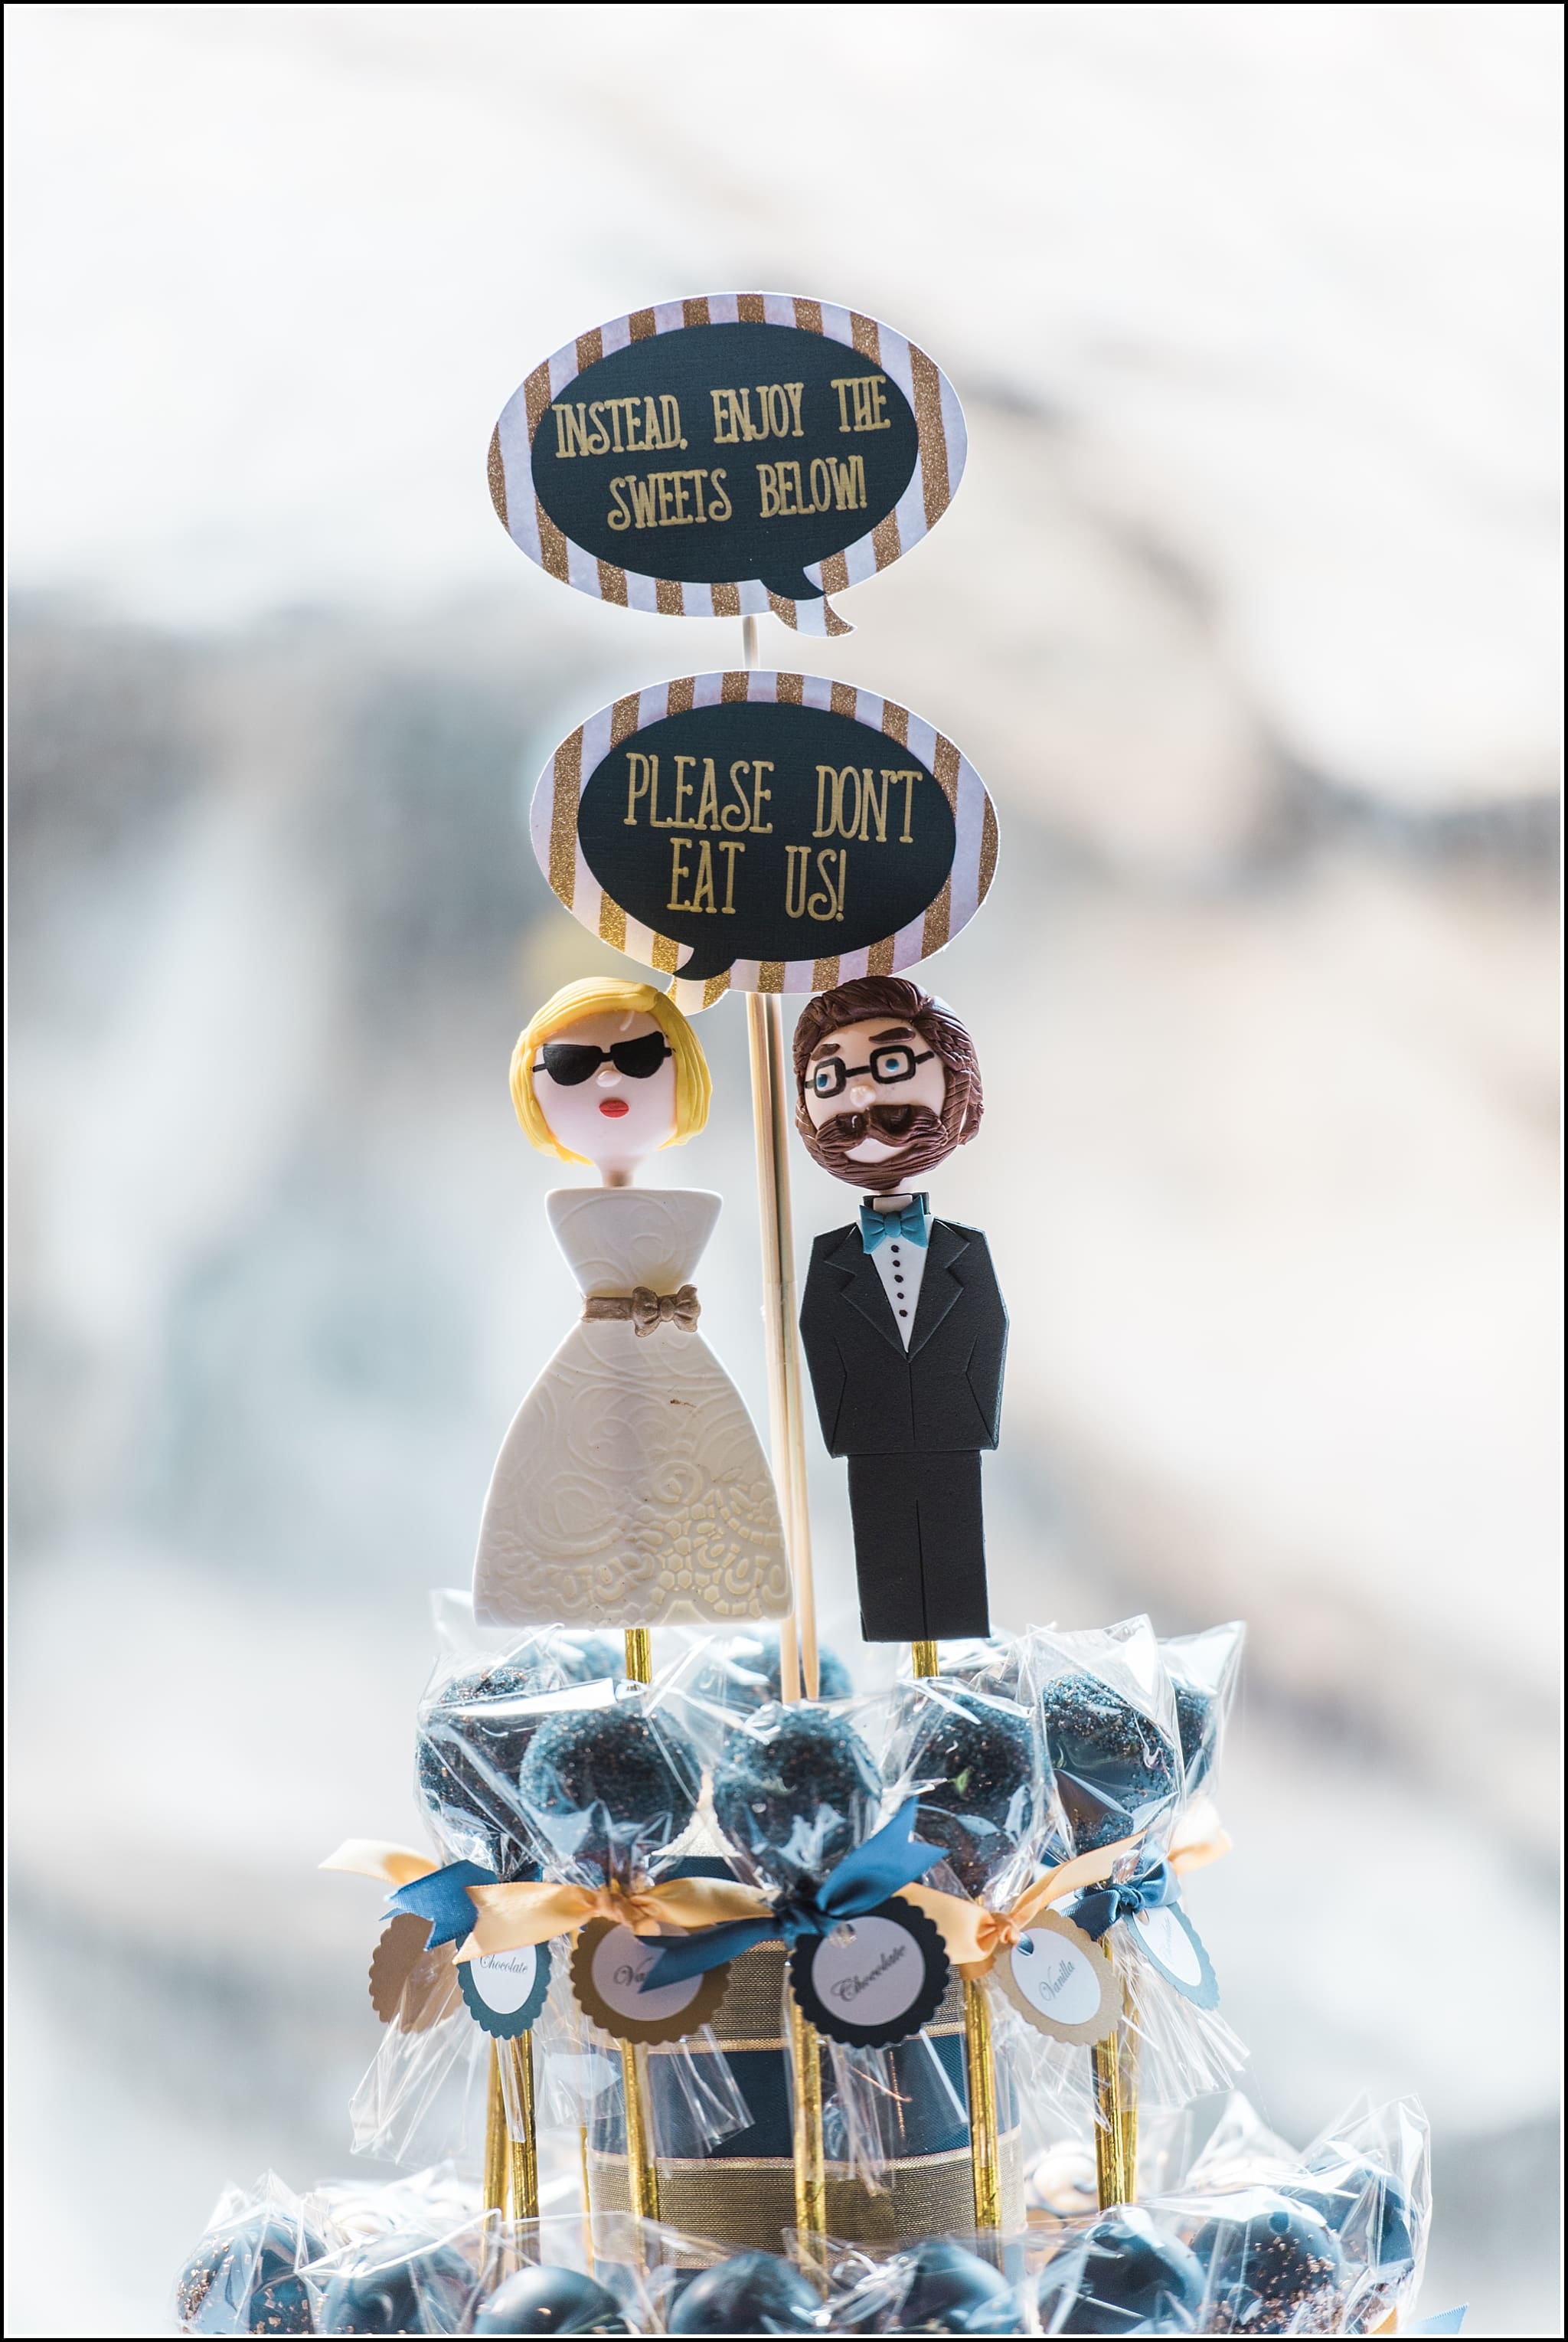  favorite wedding images 2016, wedding photos from 2016, our favorite wedding photos, fun wedding cake topper alternate ideas, cake pop wedding topper,